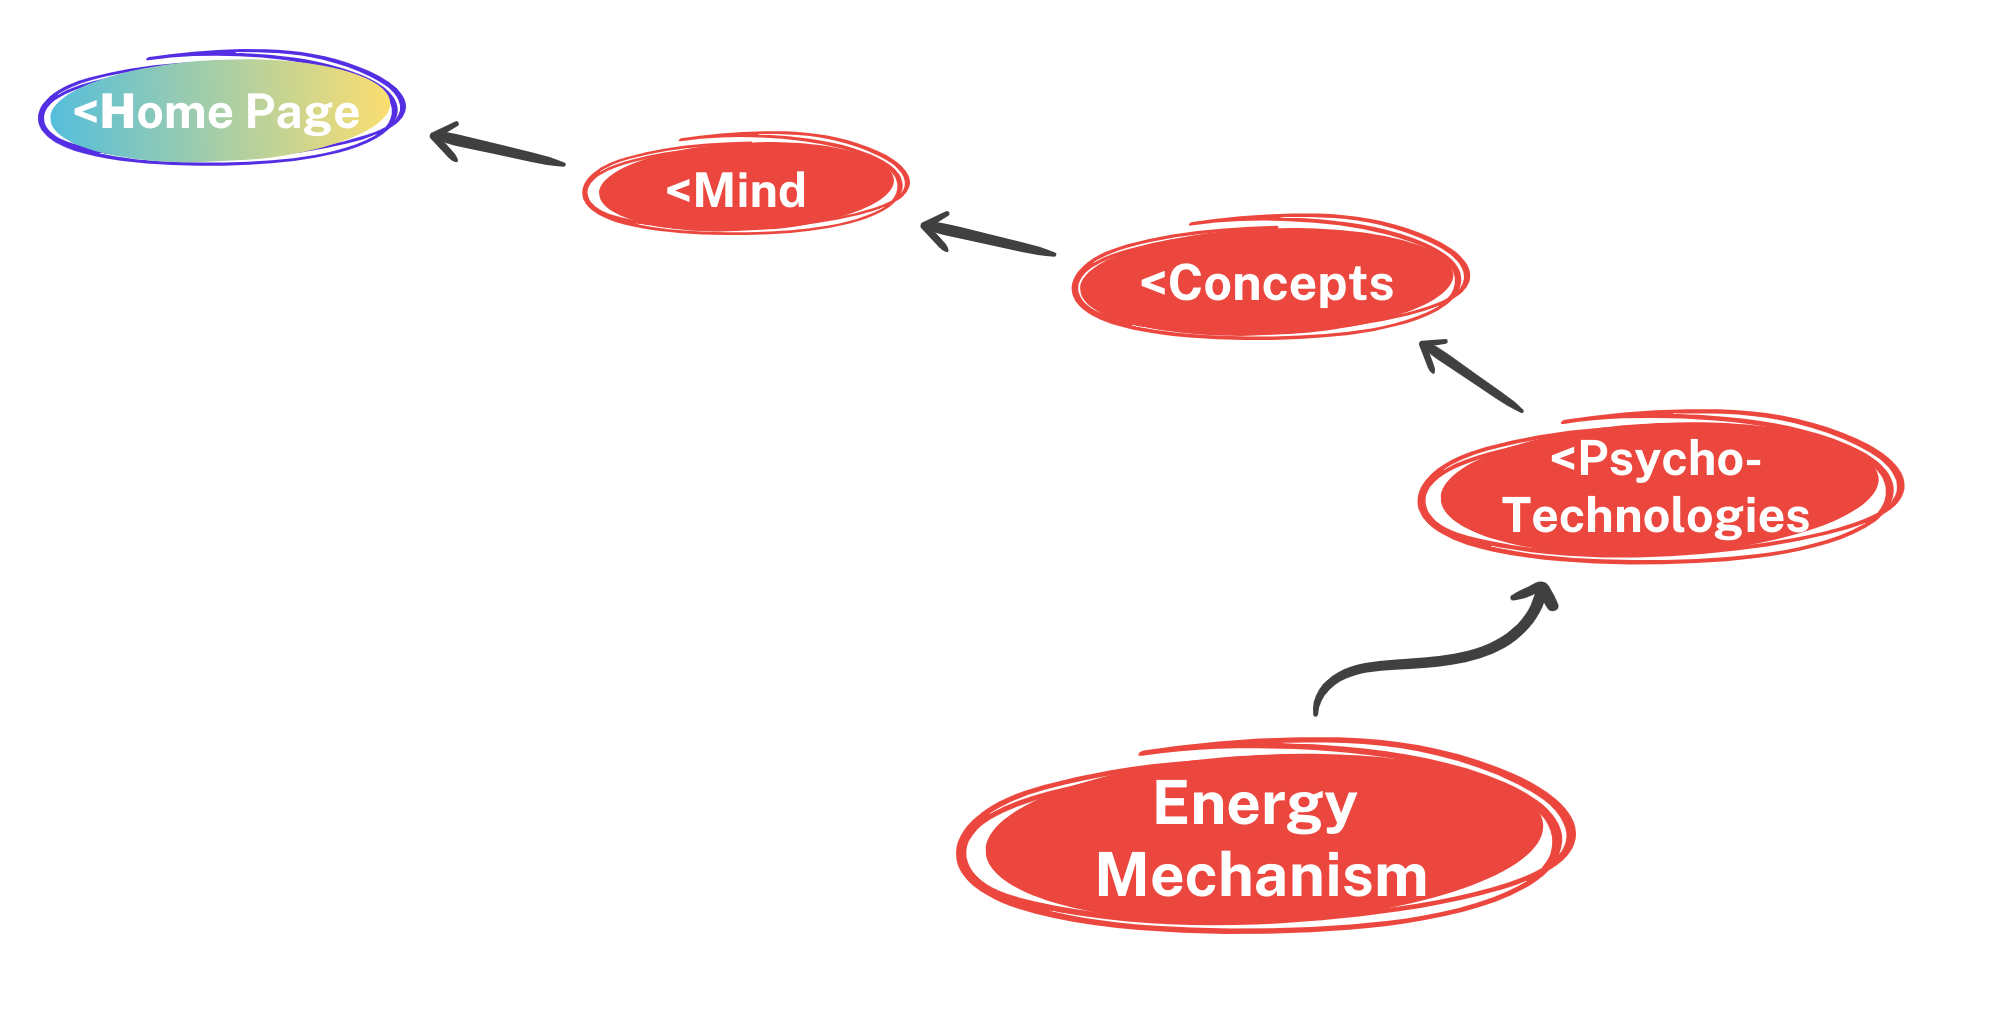 Energy Mechanism